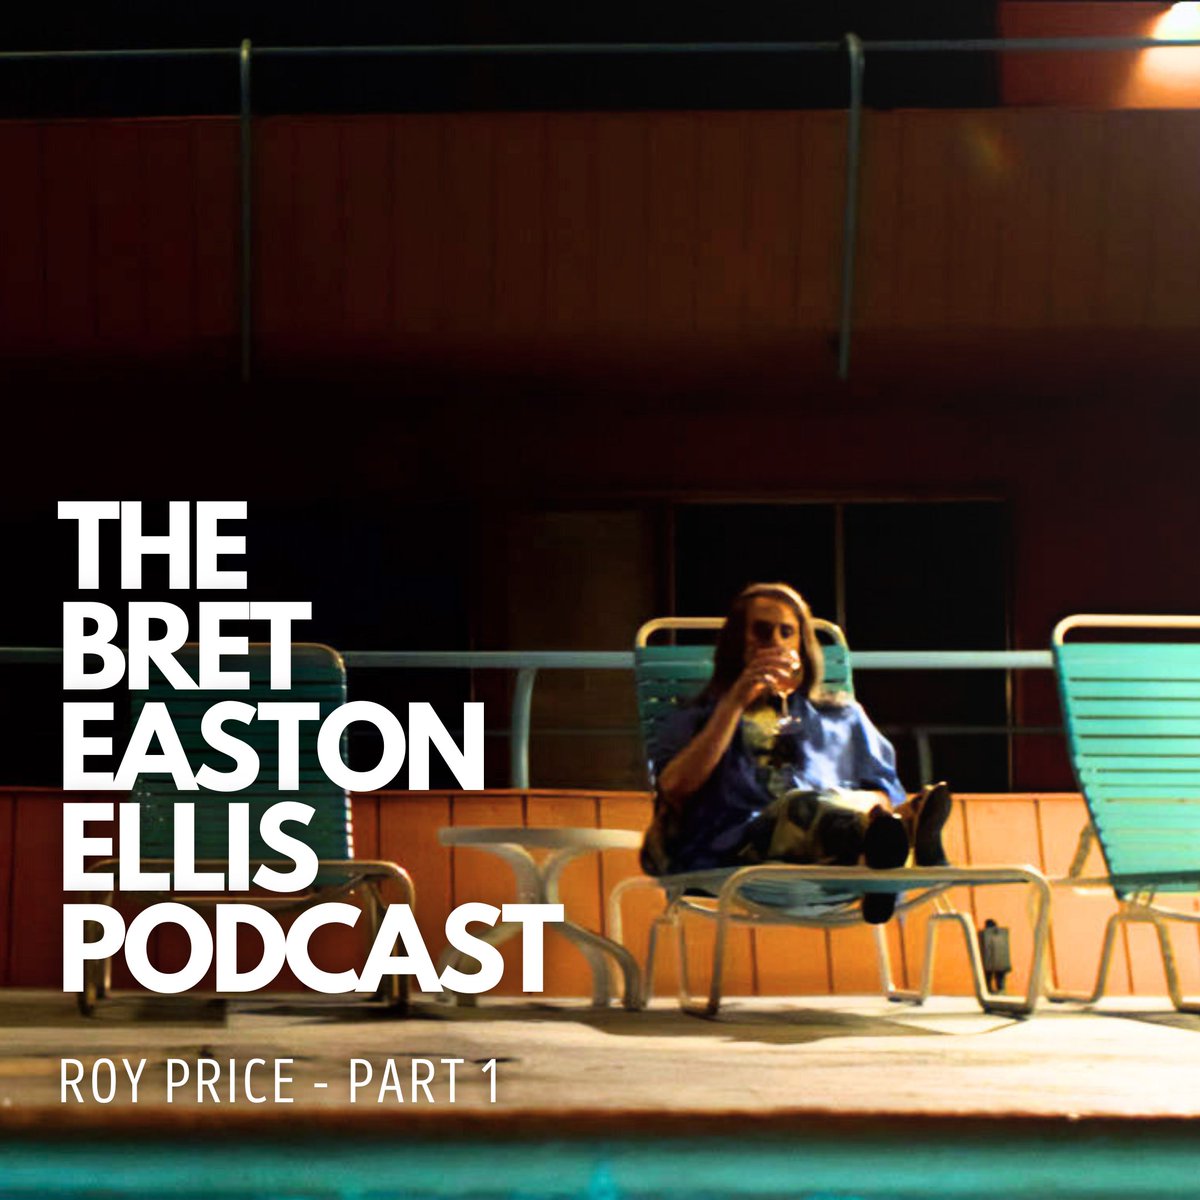 The Bret Easton Ellis Podcast - Season 8, Episode 1 - Roy Price (Part 1 of 2). Bit.ly/beeprice1